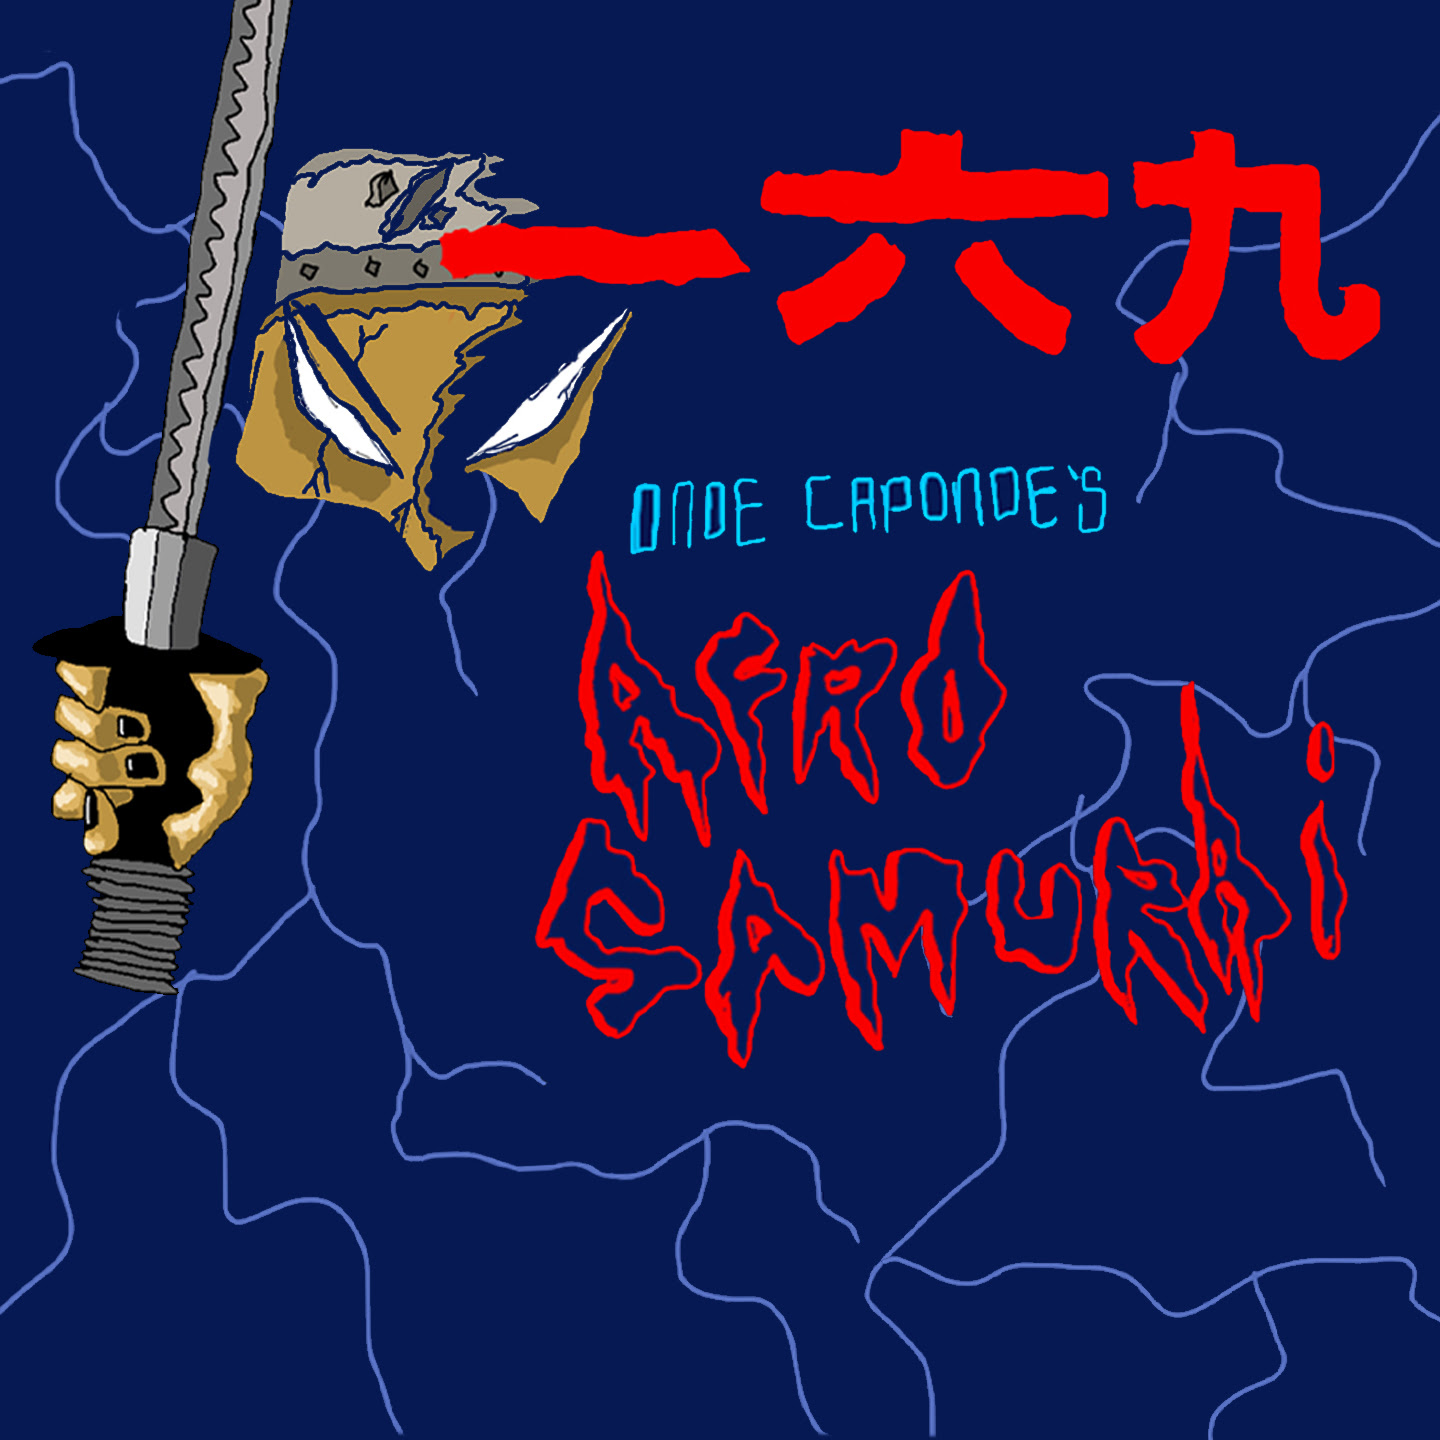 Onoe_caponoe_afro_samurai__quest